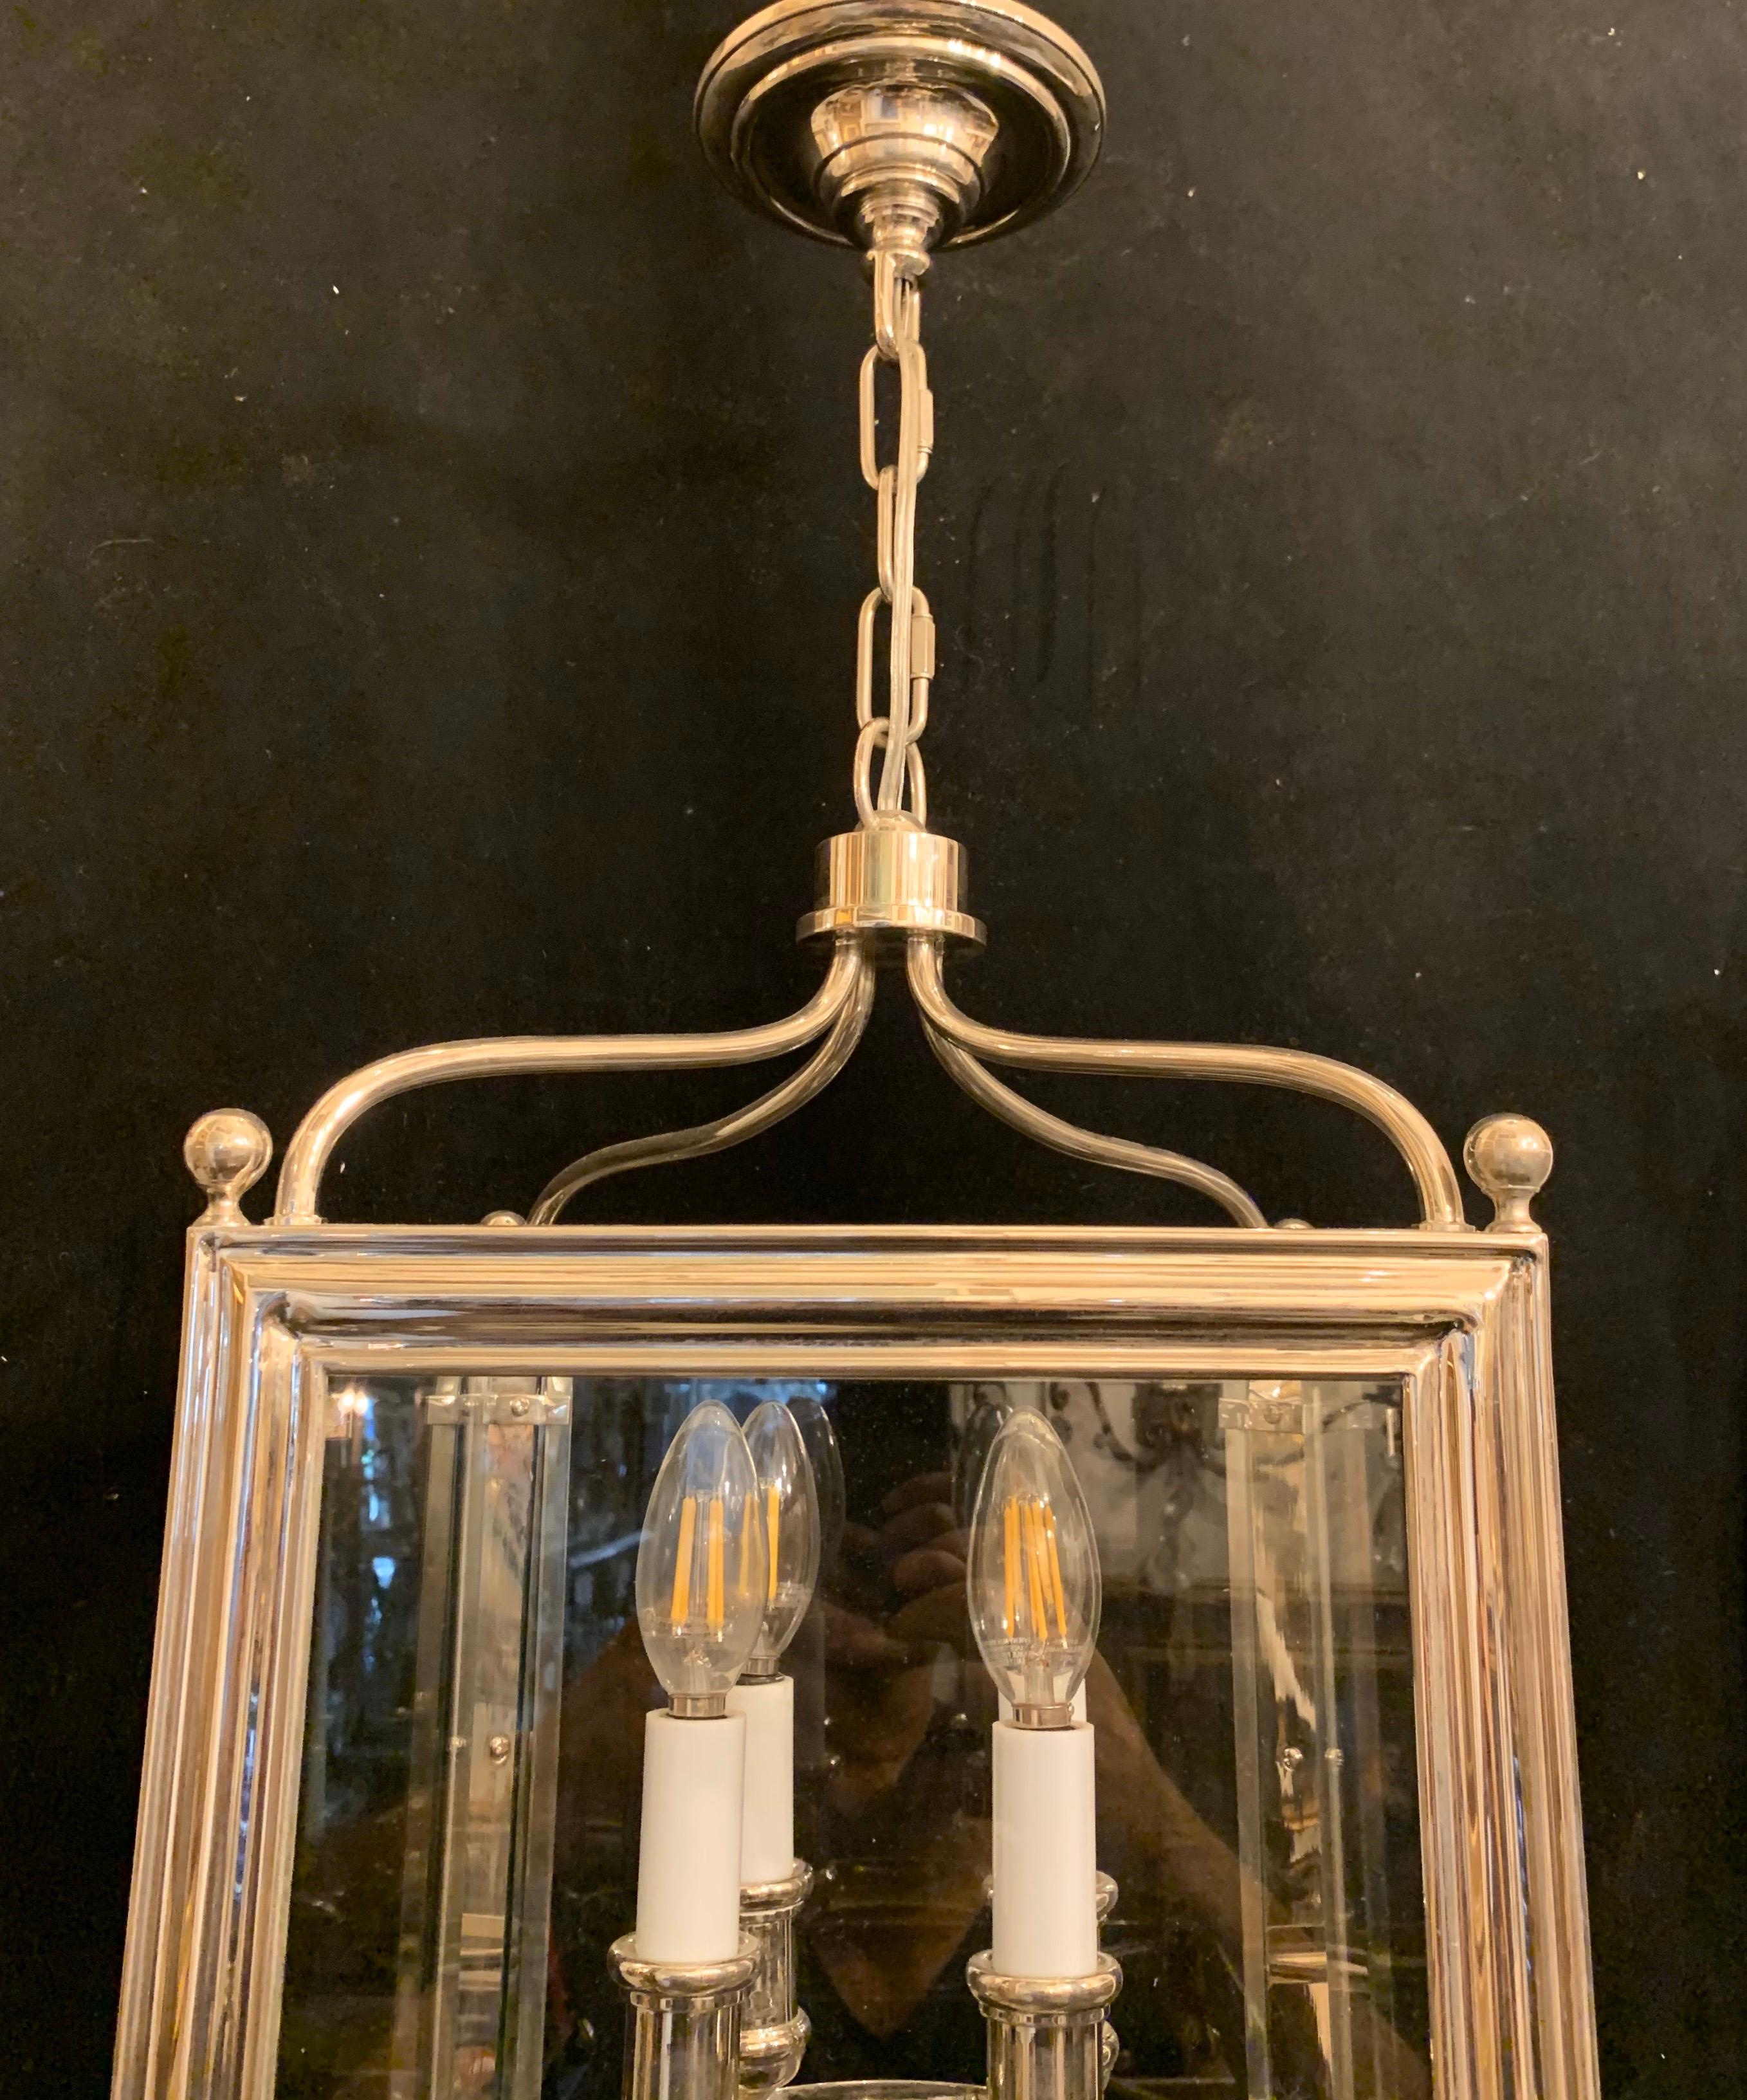 A wonderful Vaughan Designs Regency square polished nickel glass lantern fixture.